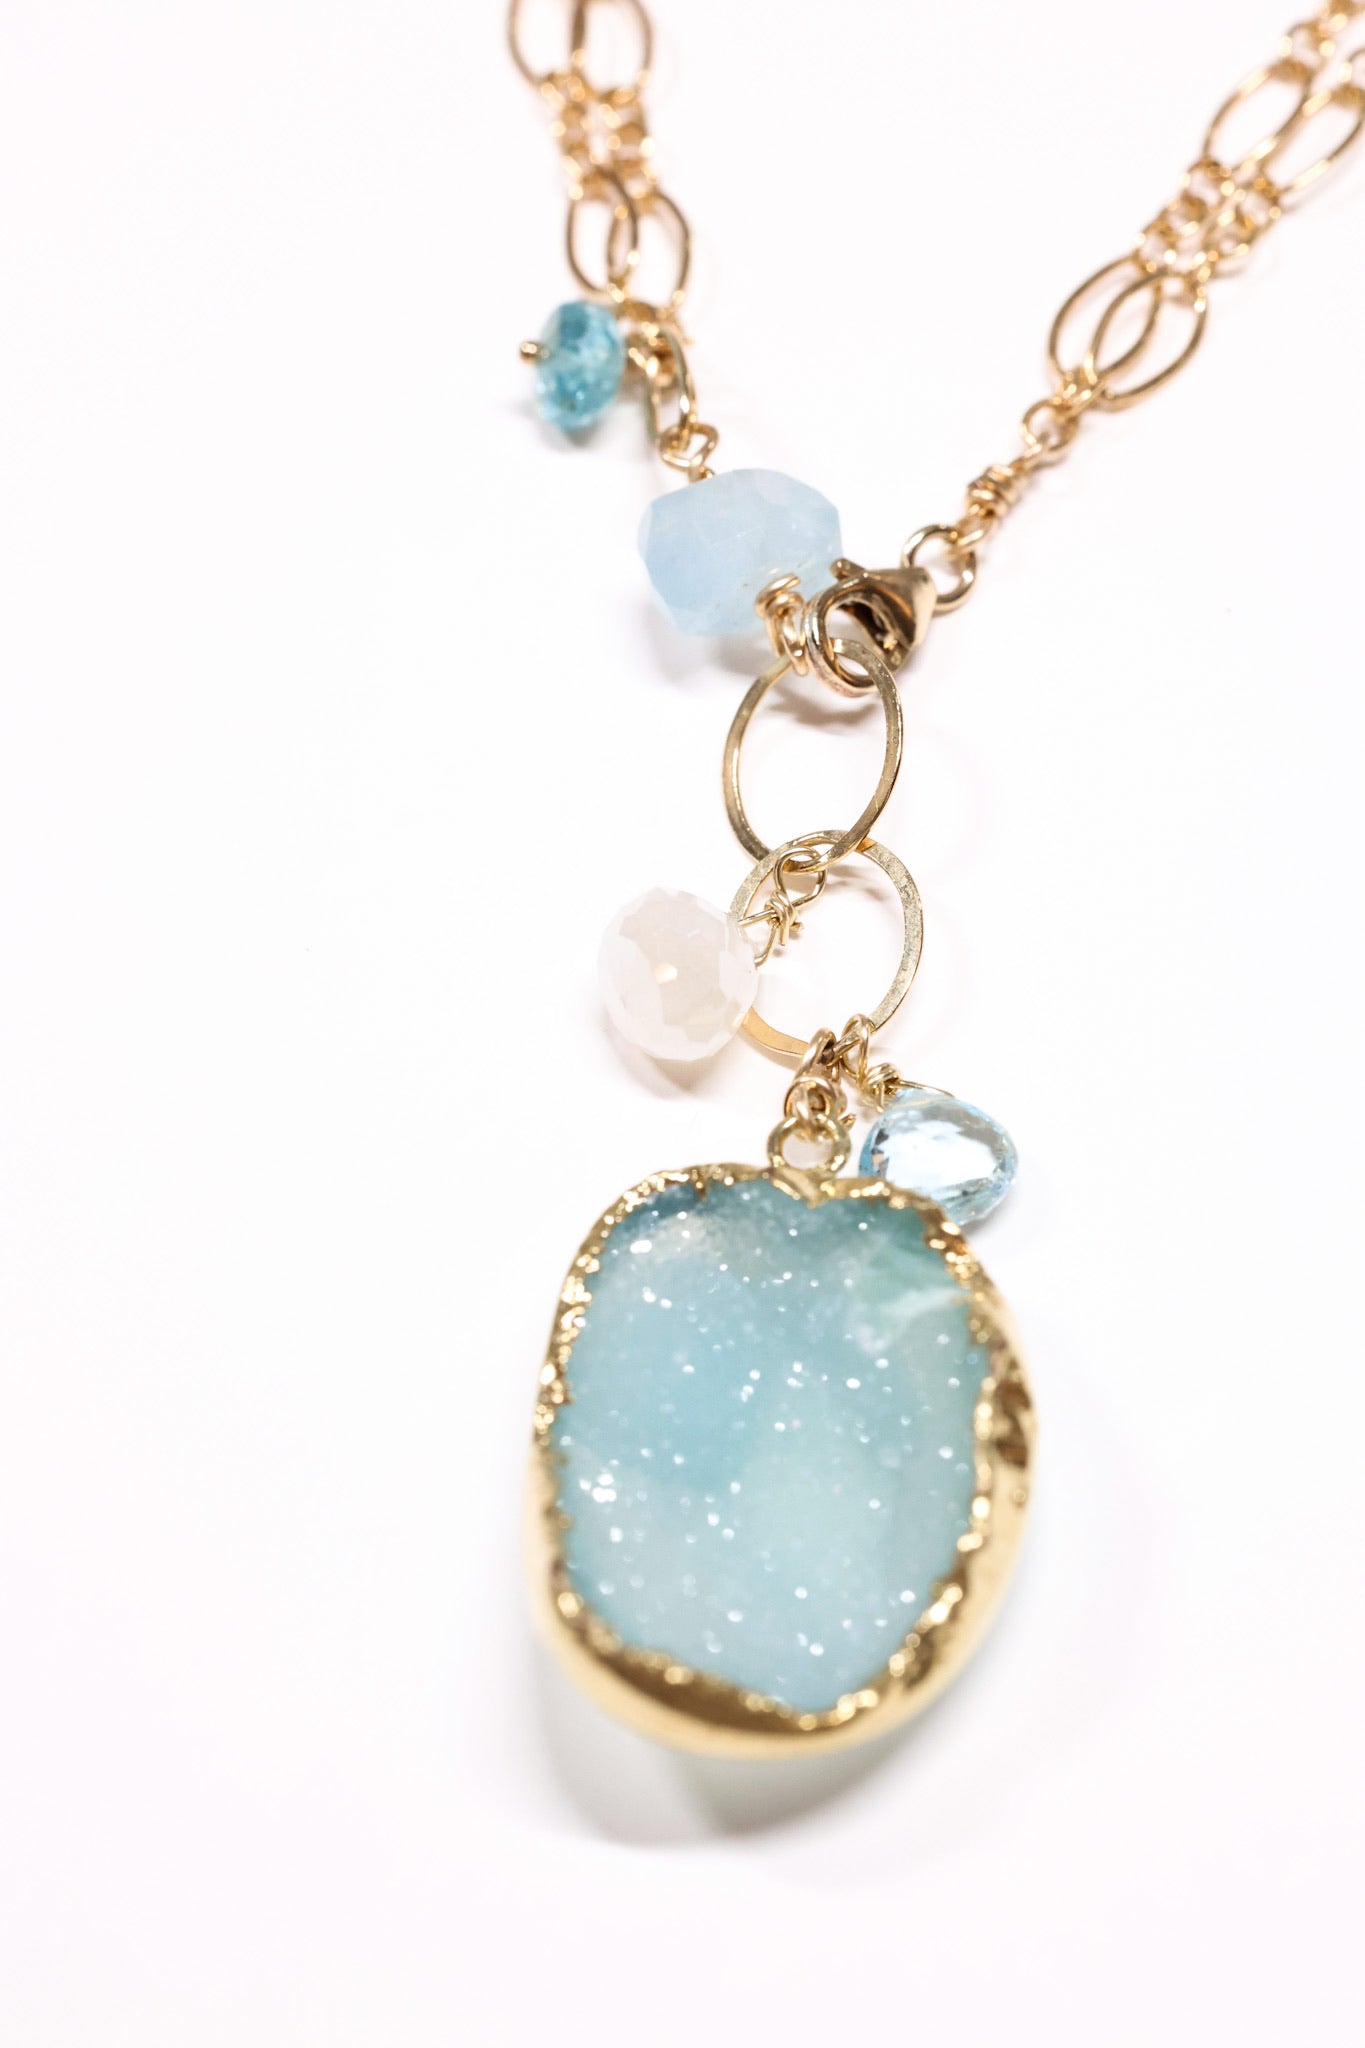 Aqua druzy necklace shown short 